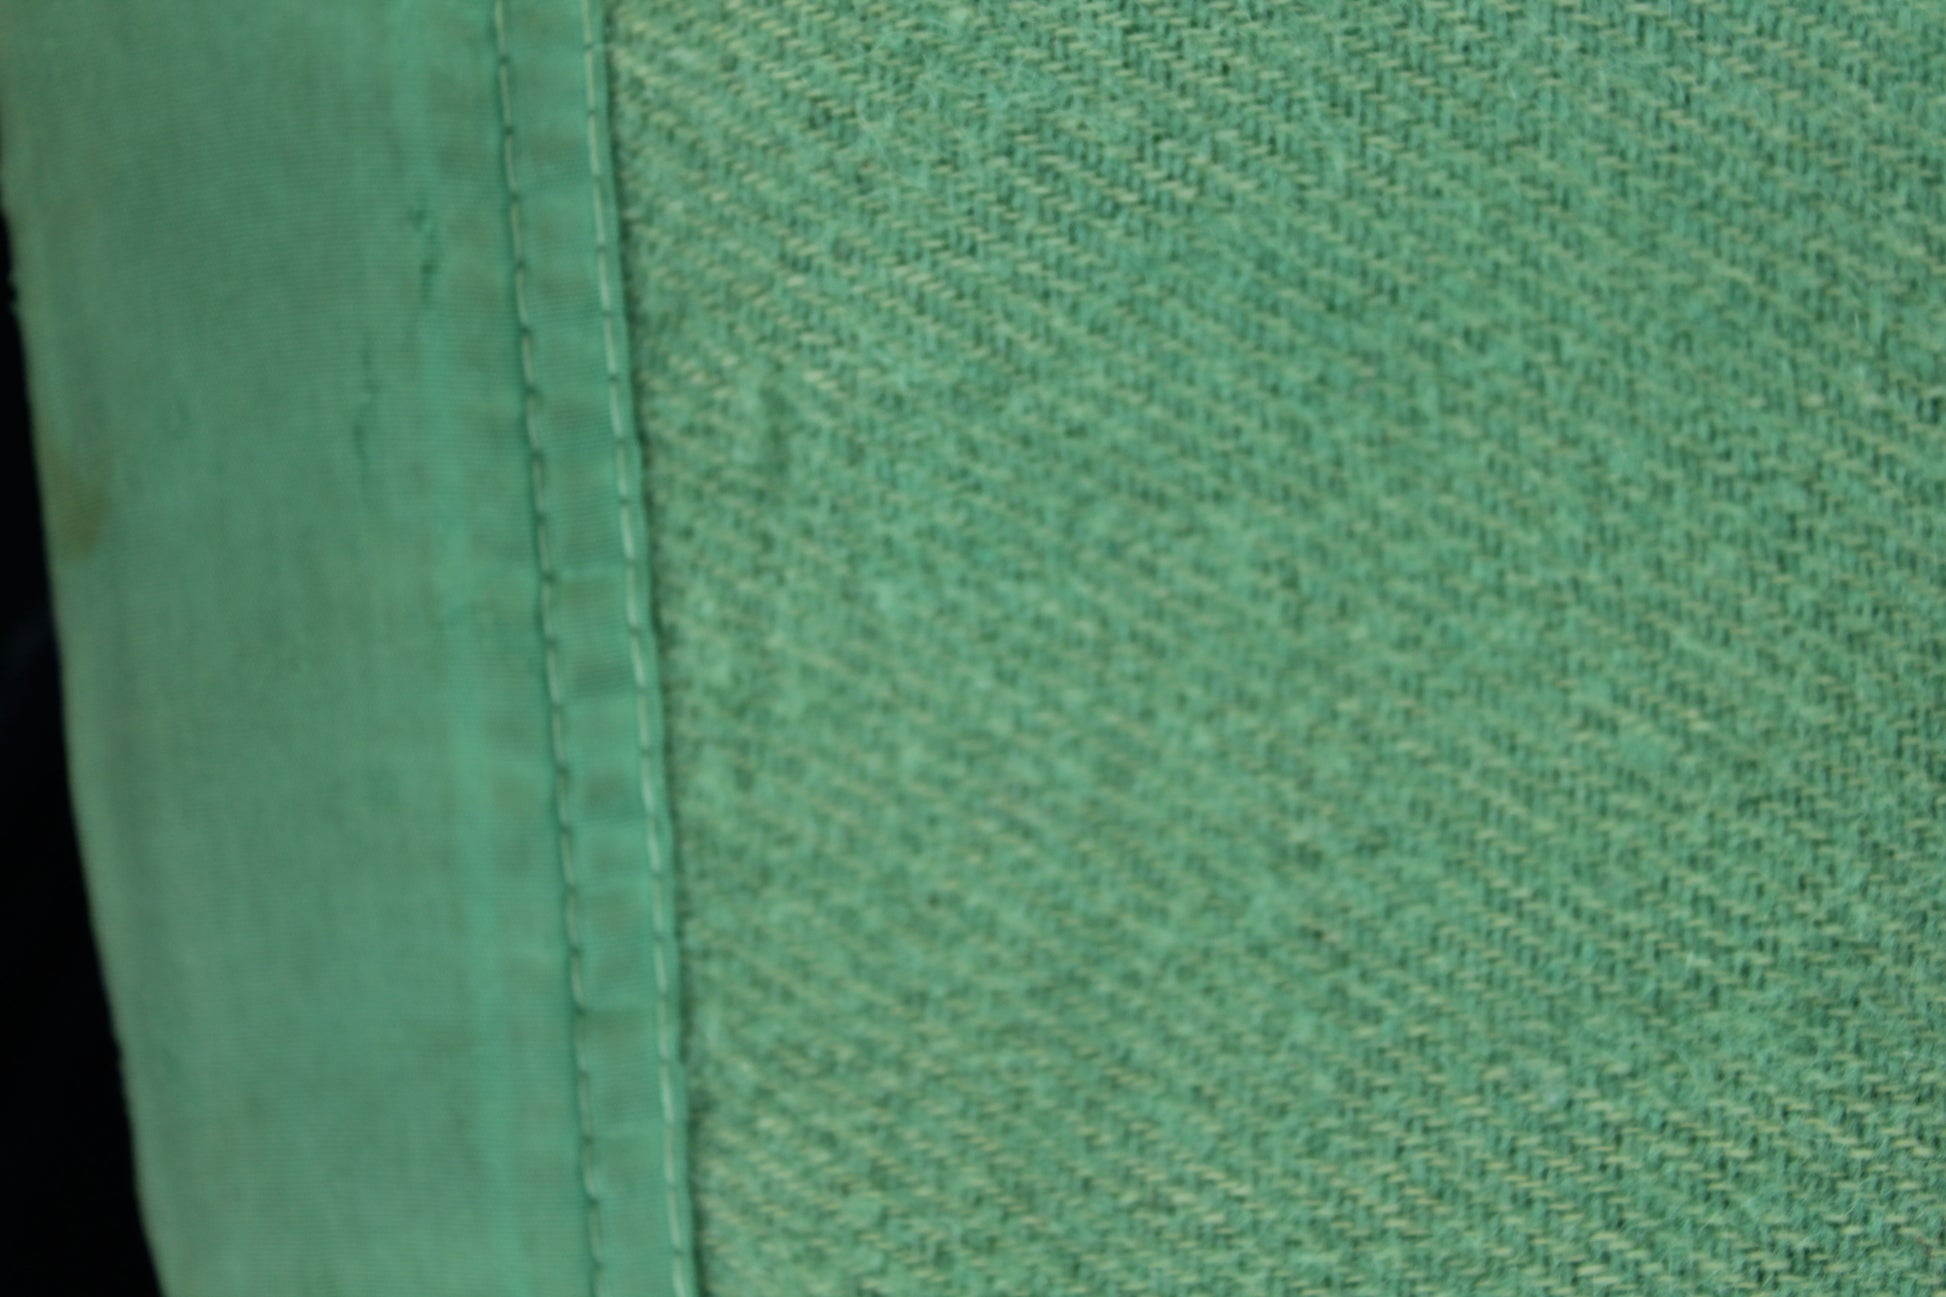 Chatham Wool Blanket - 1940s 50s - Green Soft Nice Weave - 66" X 79" nice mottled weave